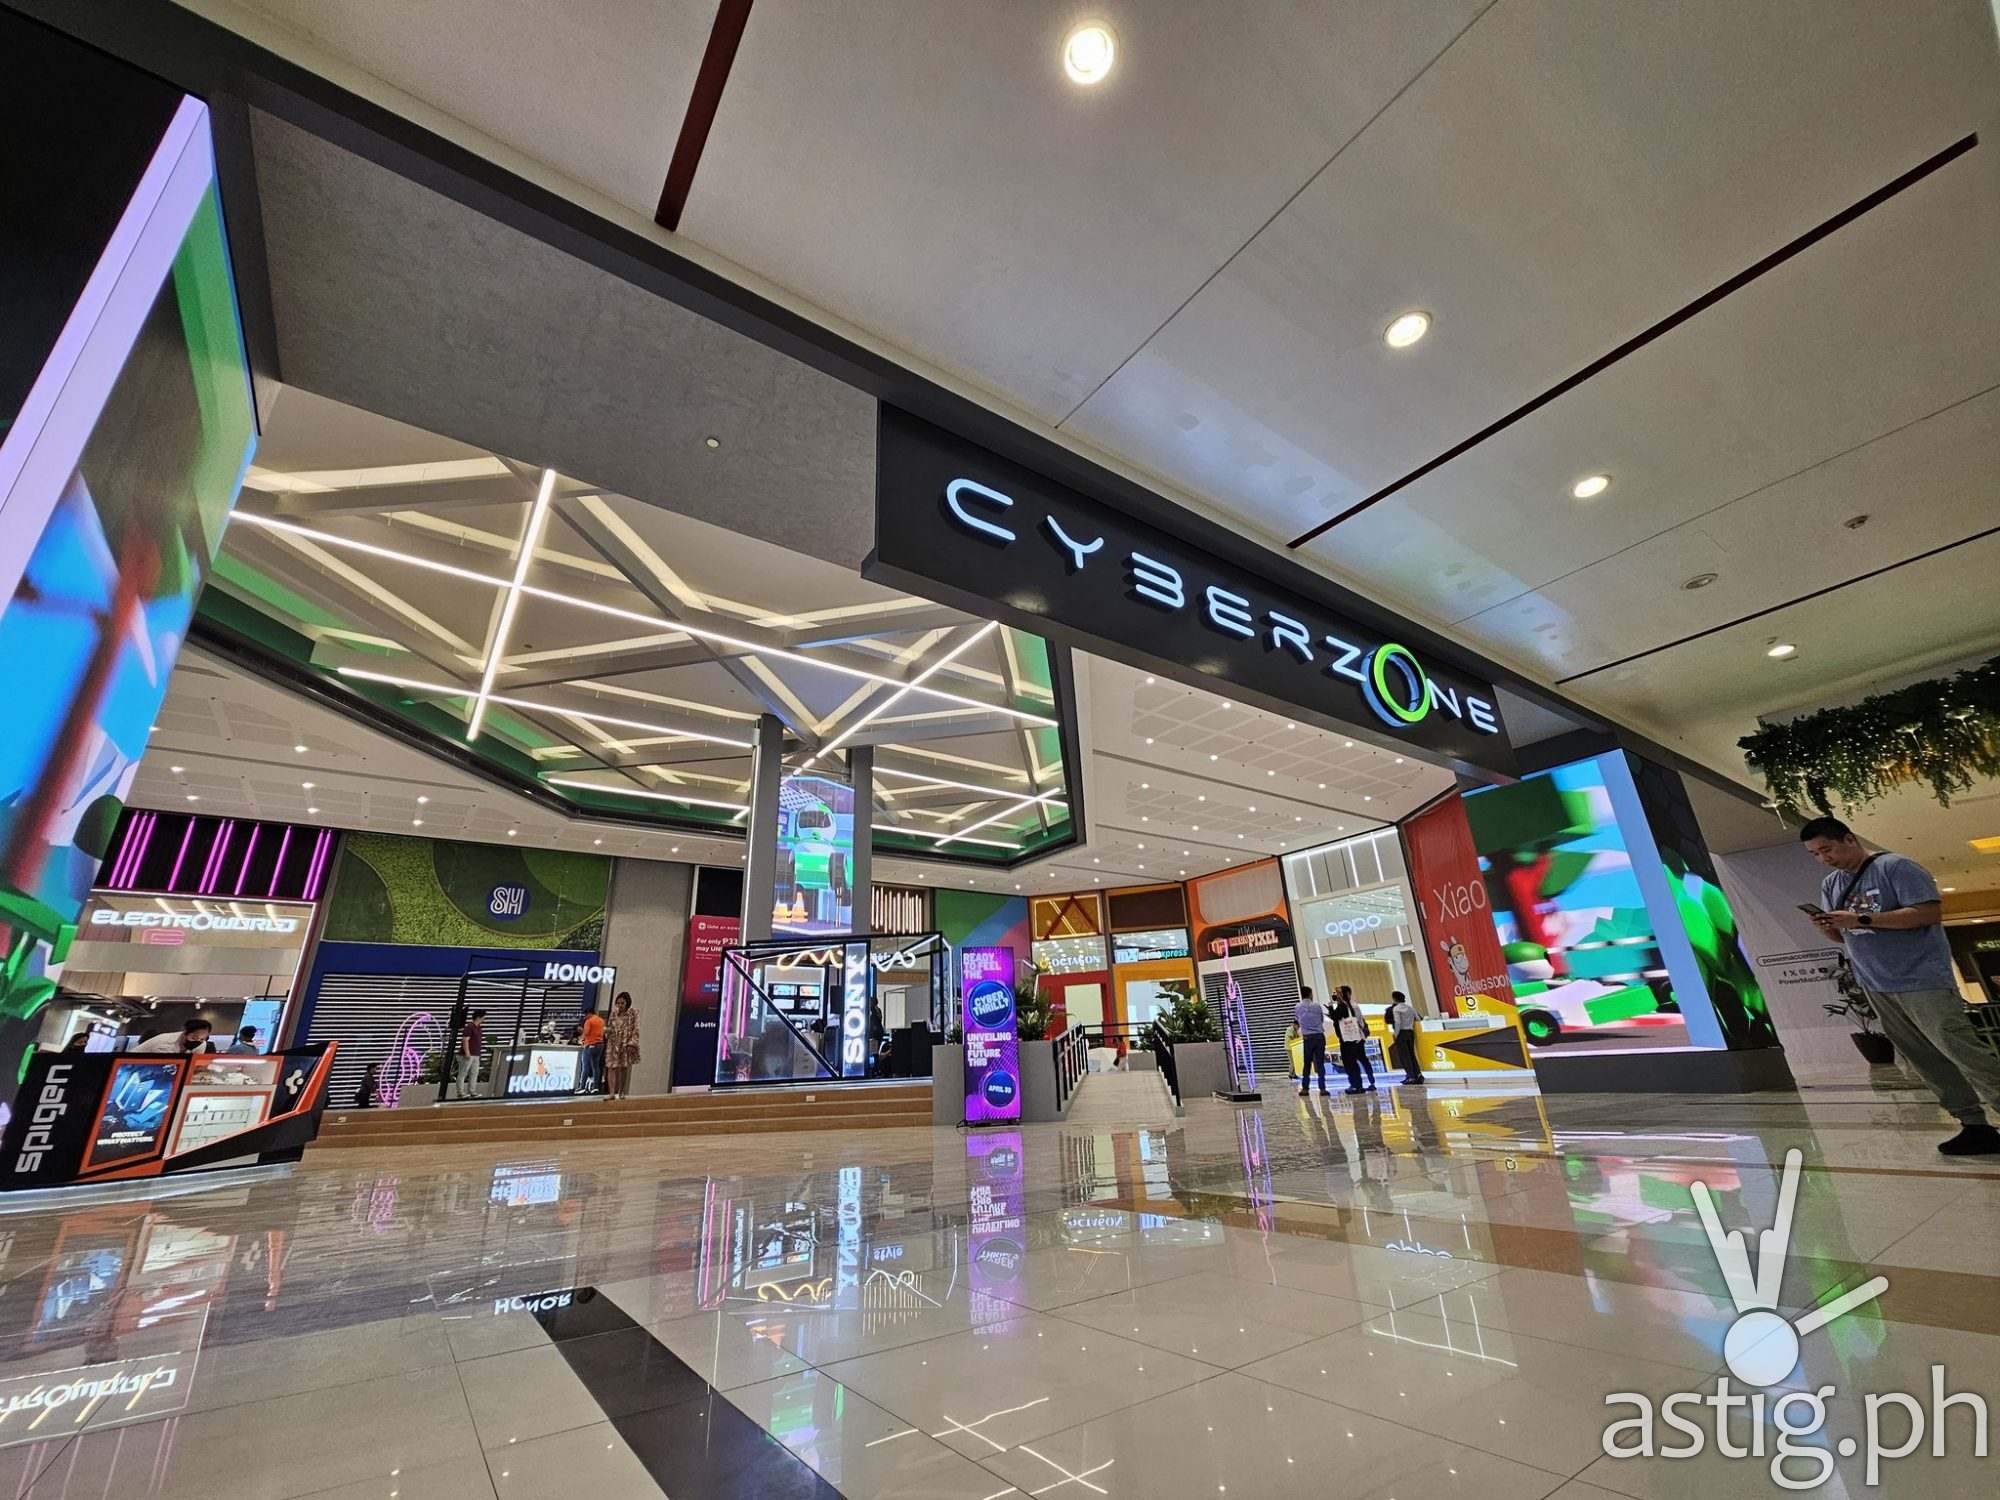 Cyberpunk vibes at the new SM Marikina Cyberzone